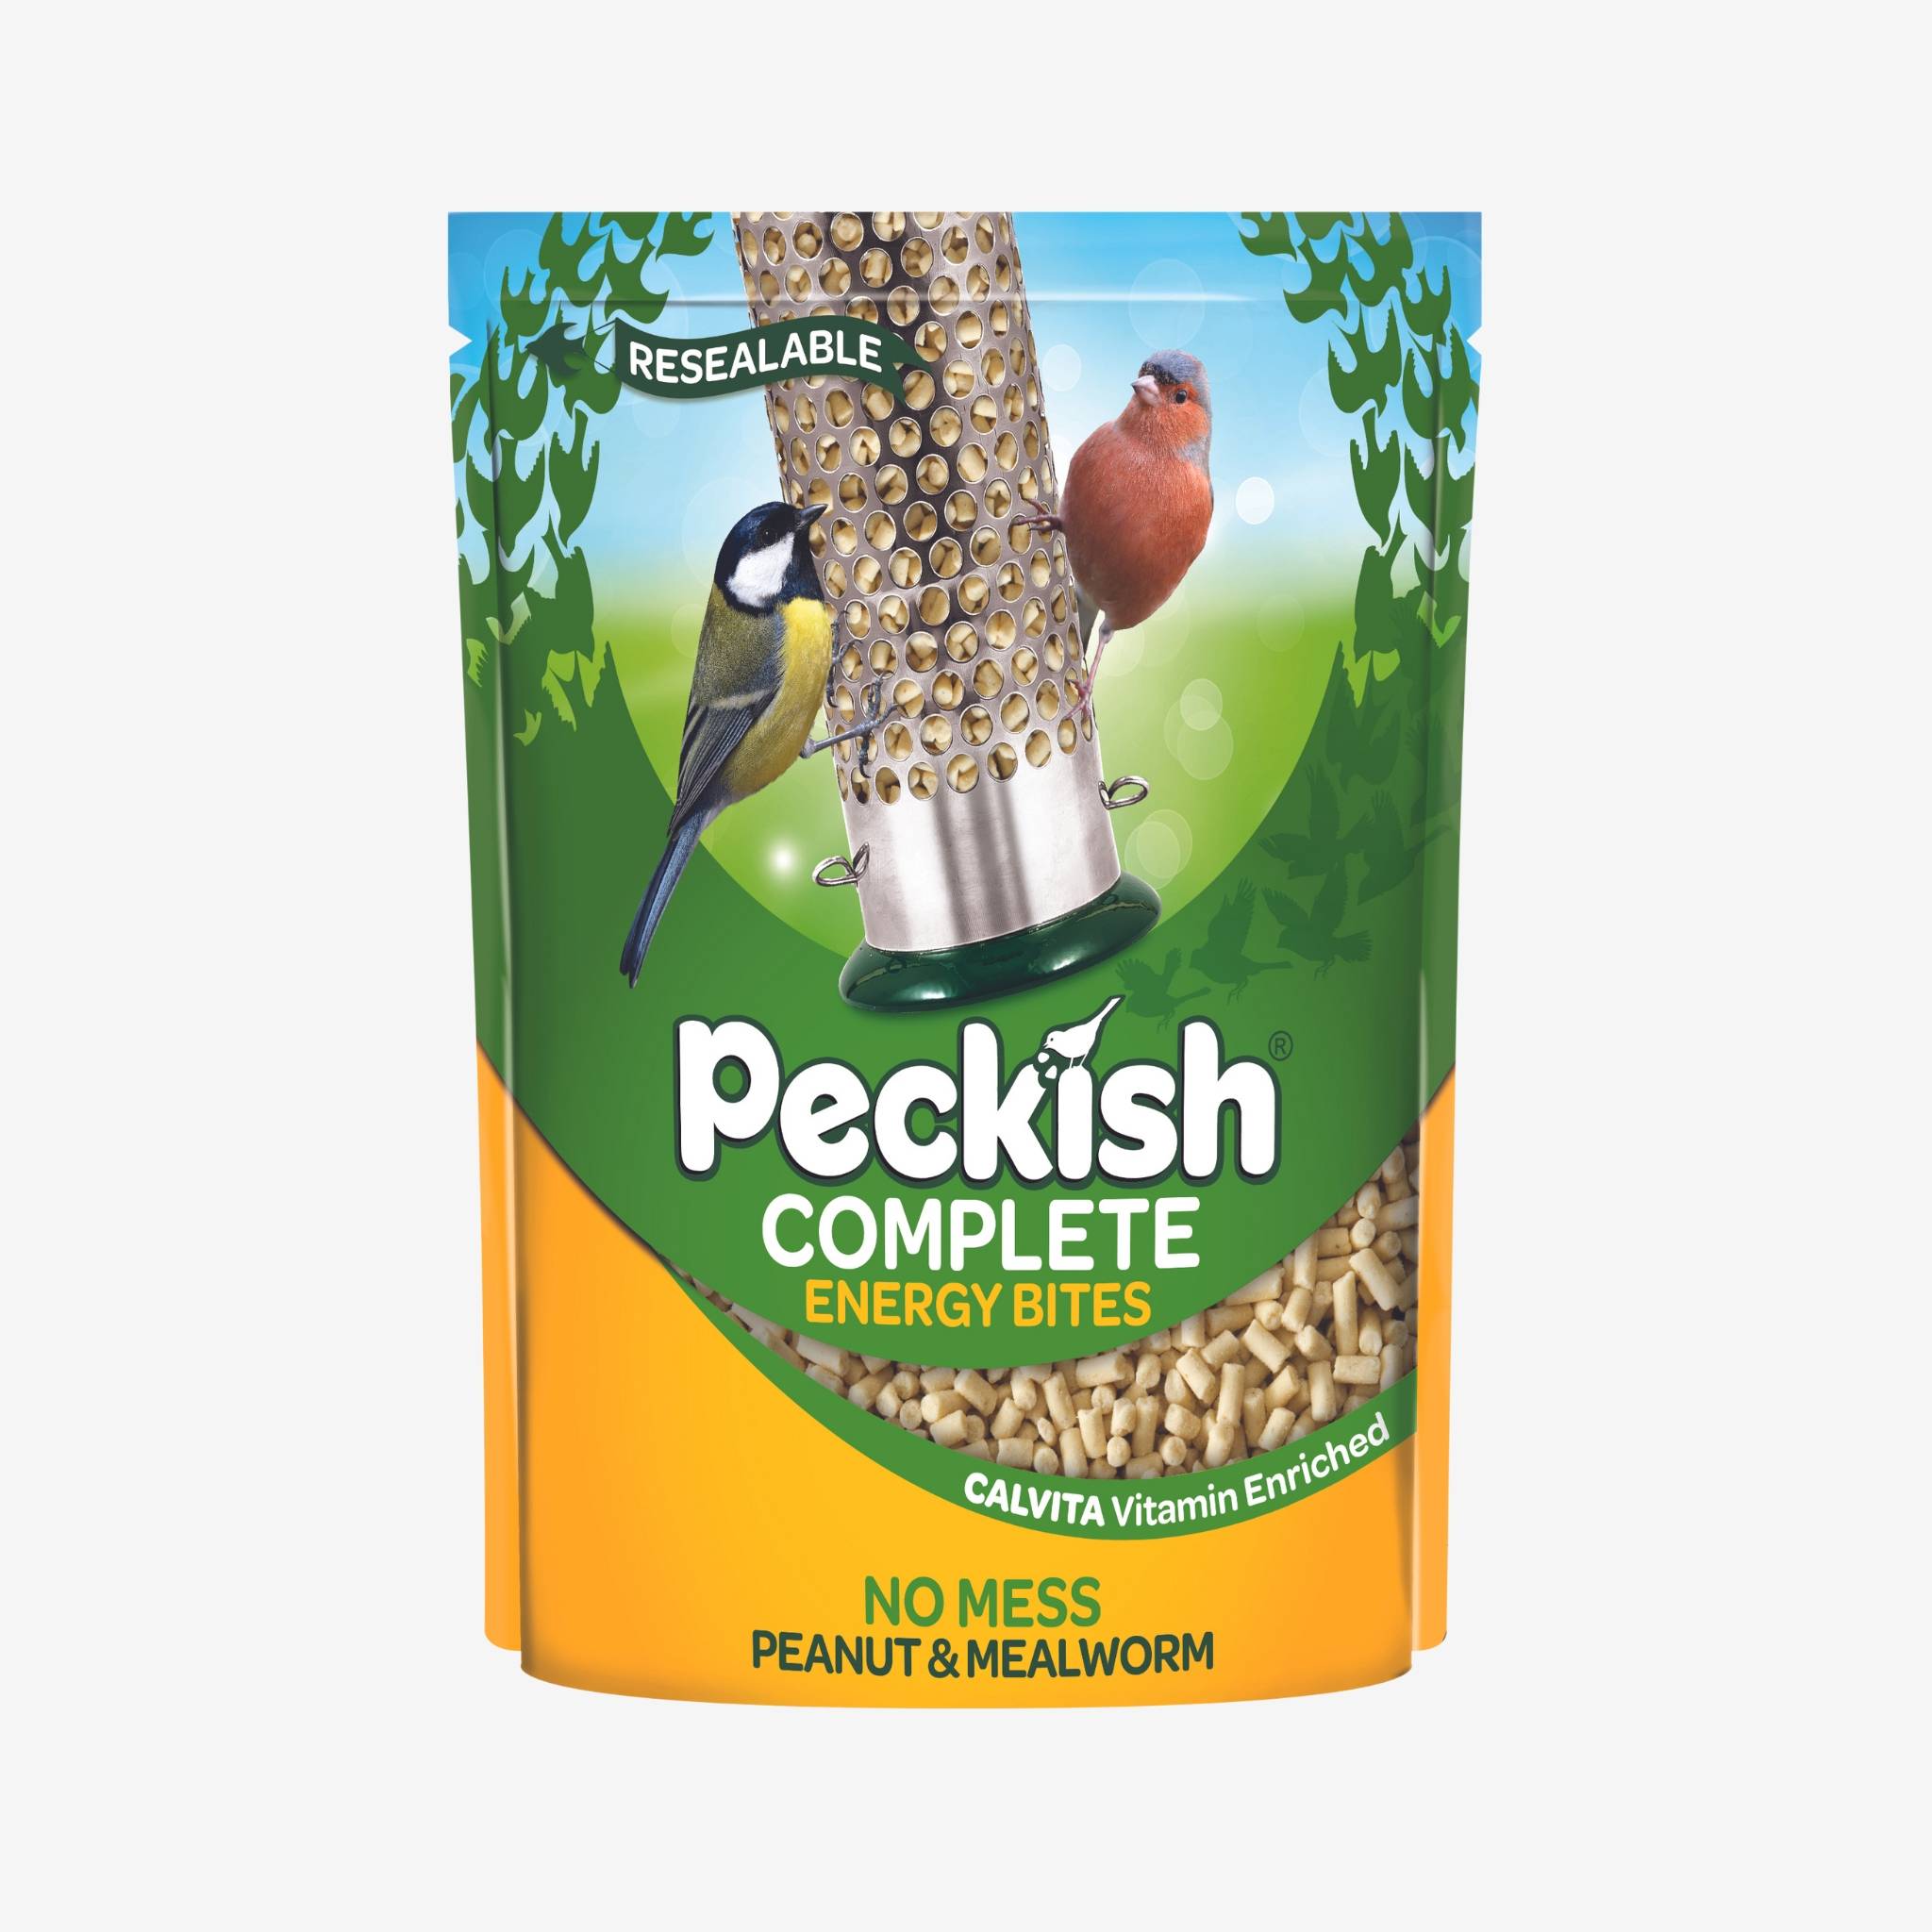 Peckish Complete Energy Bites in packaging